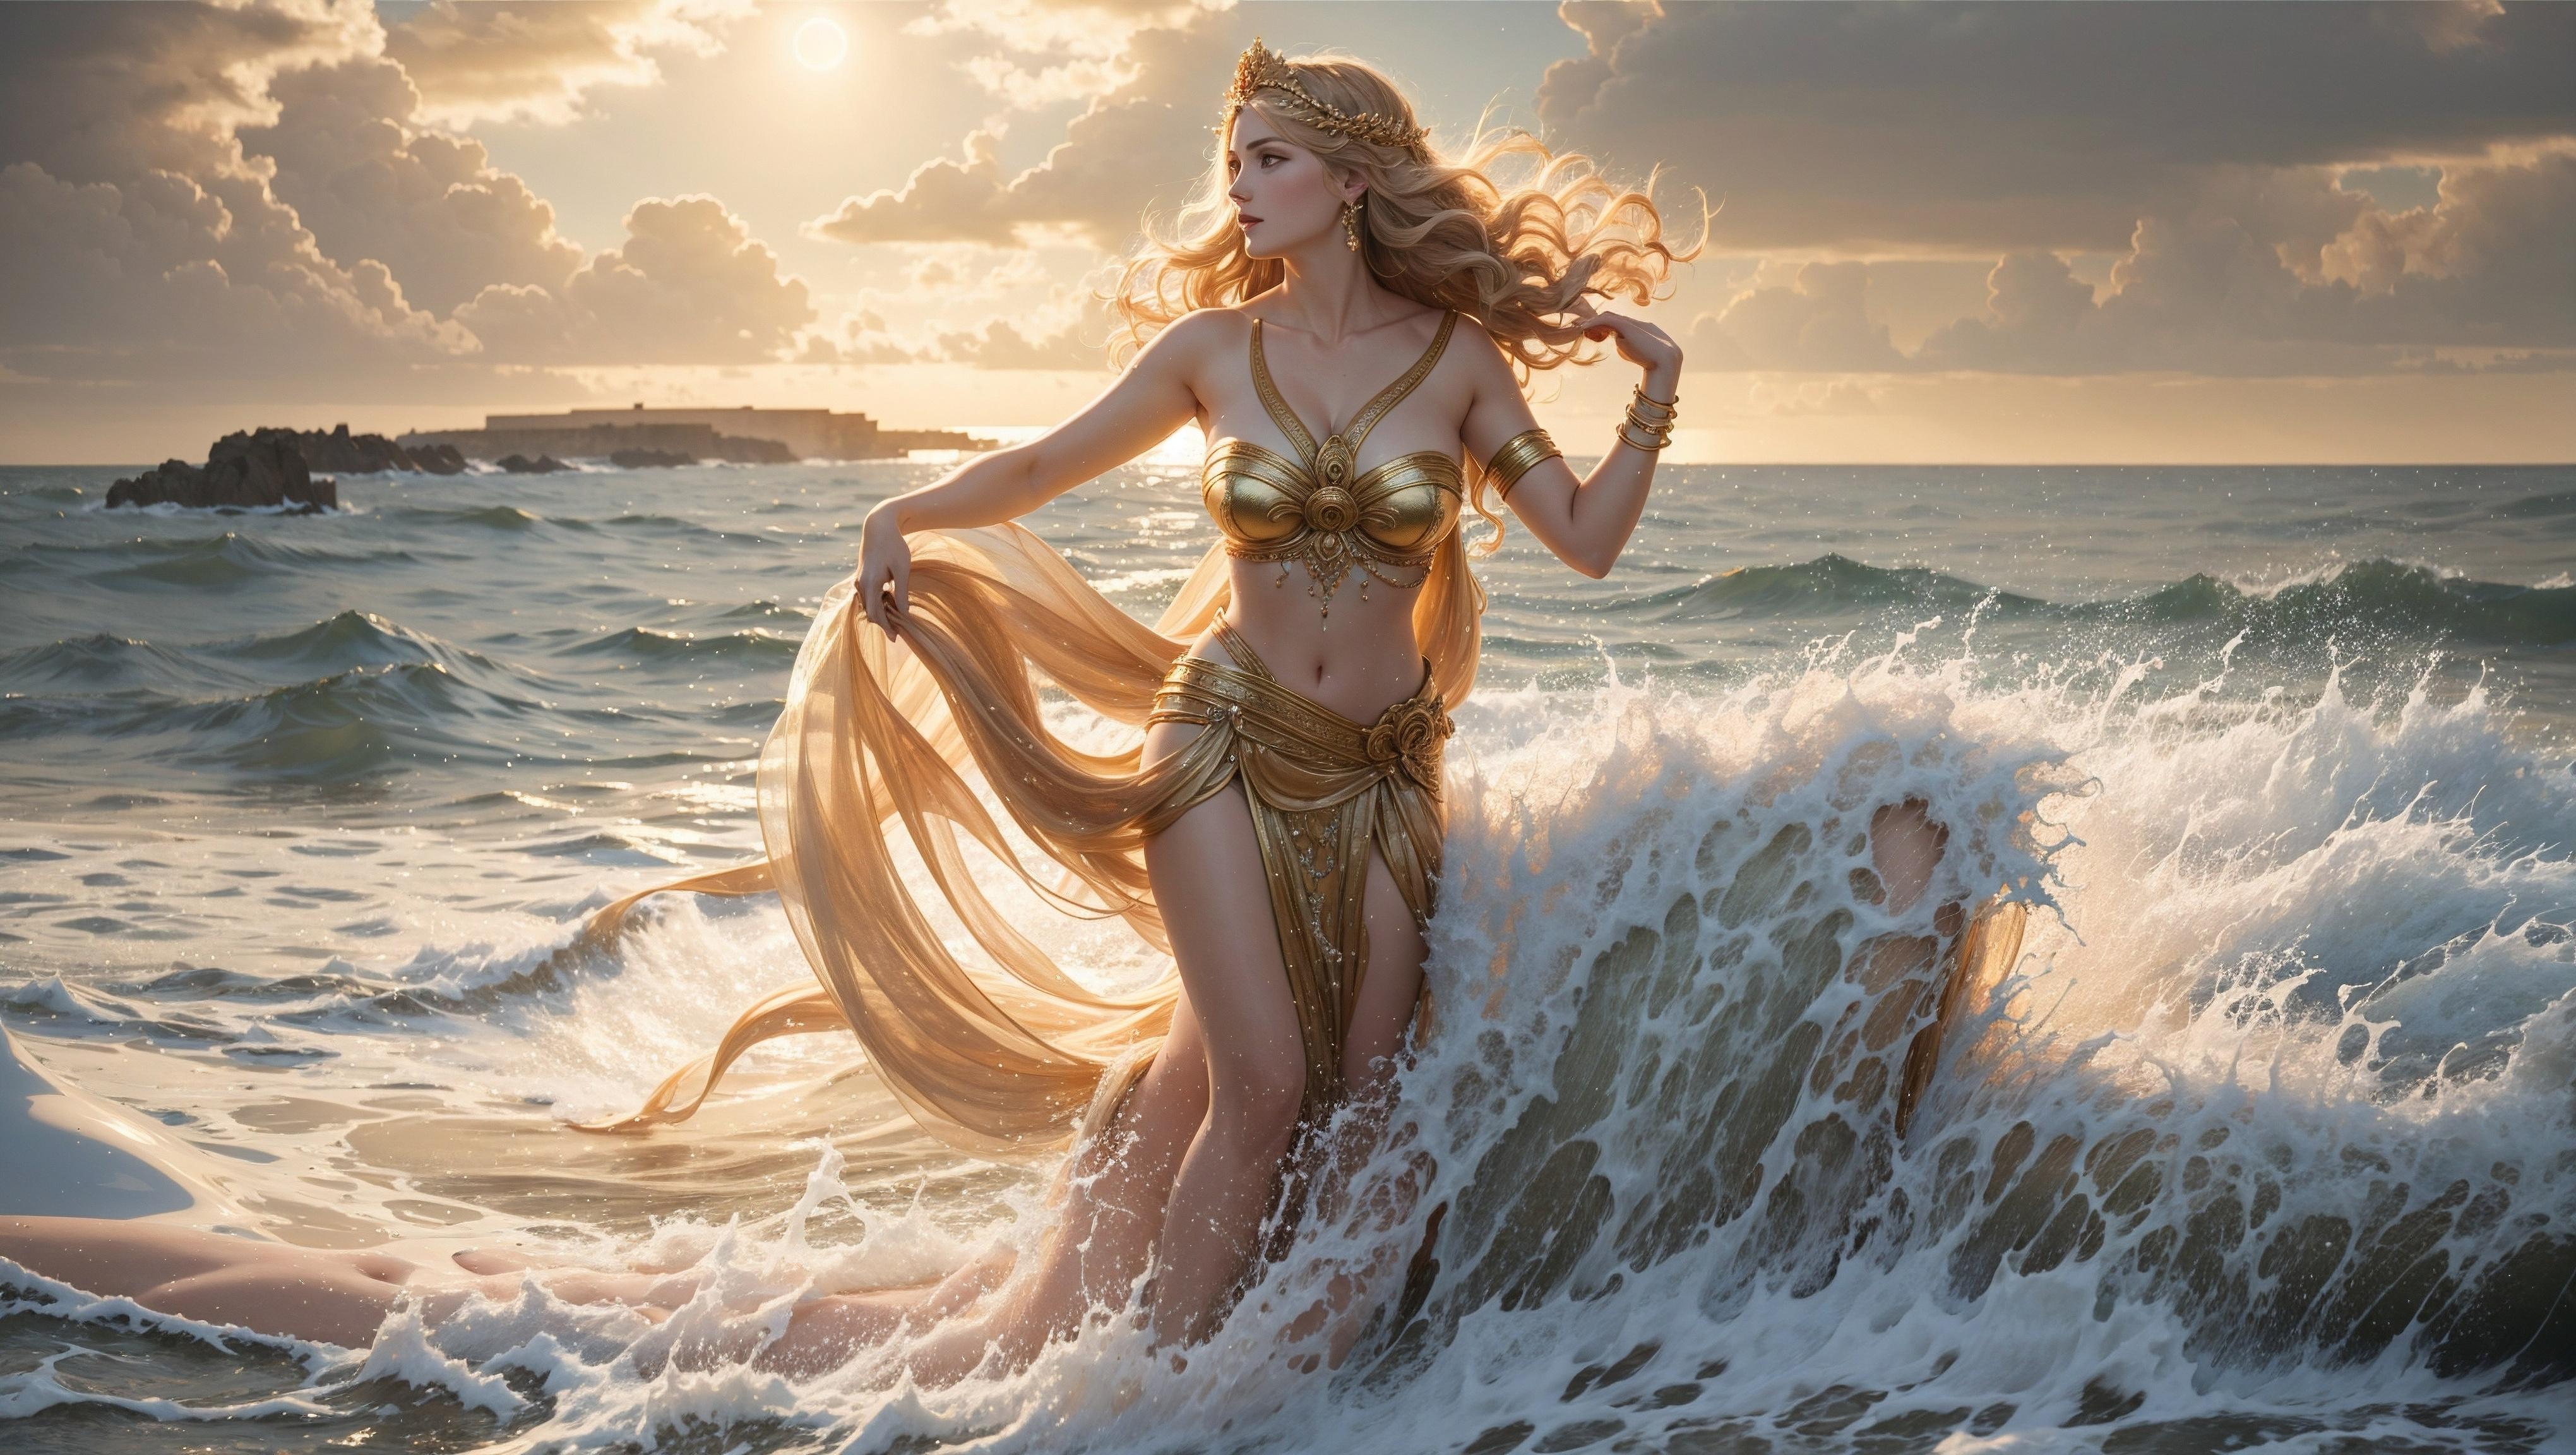 General 4080x2304 AI art digital art women Aphrodite Greek mythology waves sea water sea foam sunlight clouds sky looking away long hair outdoors women outdoors belly button collarbone